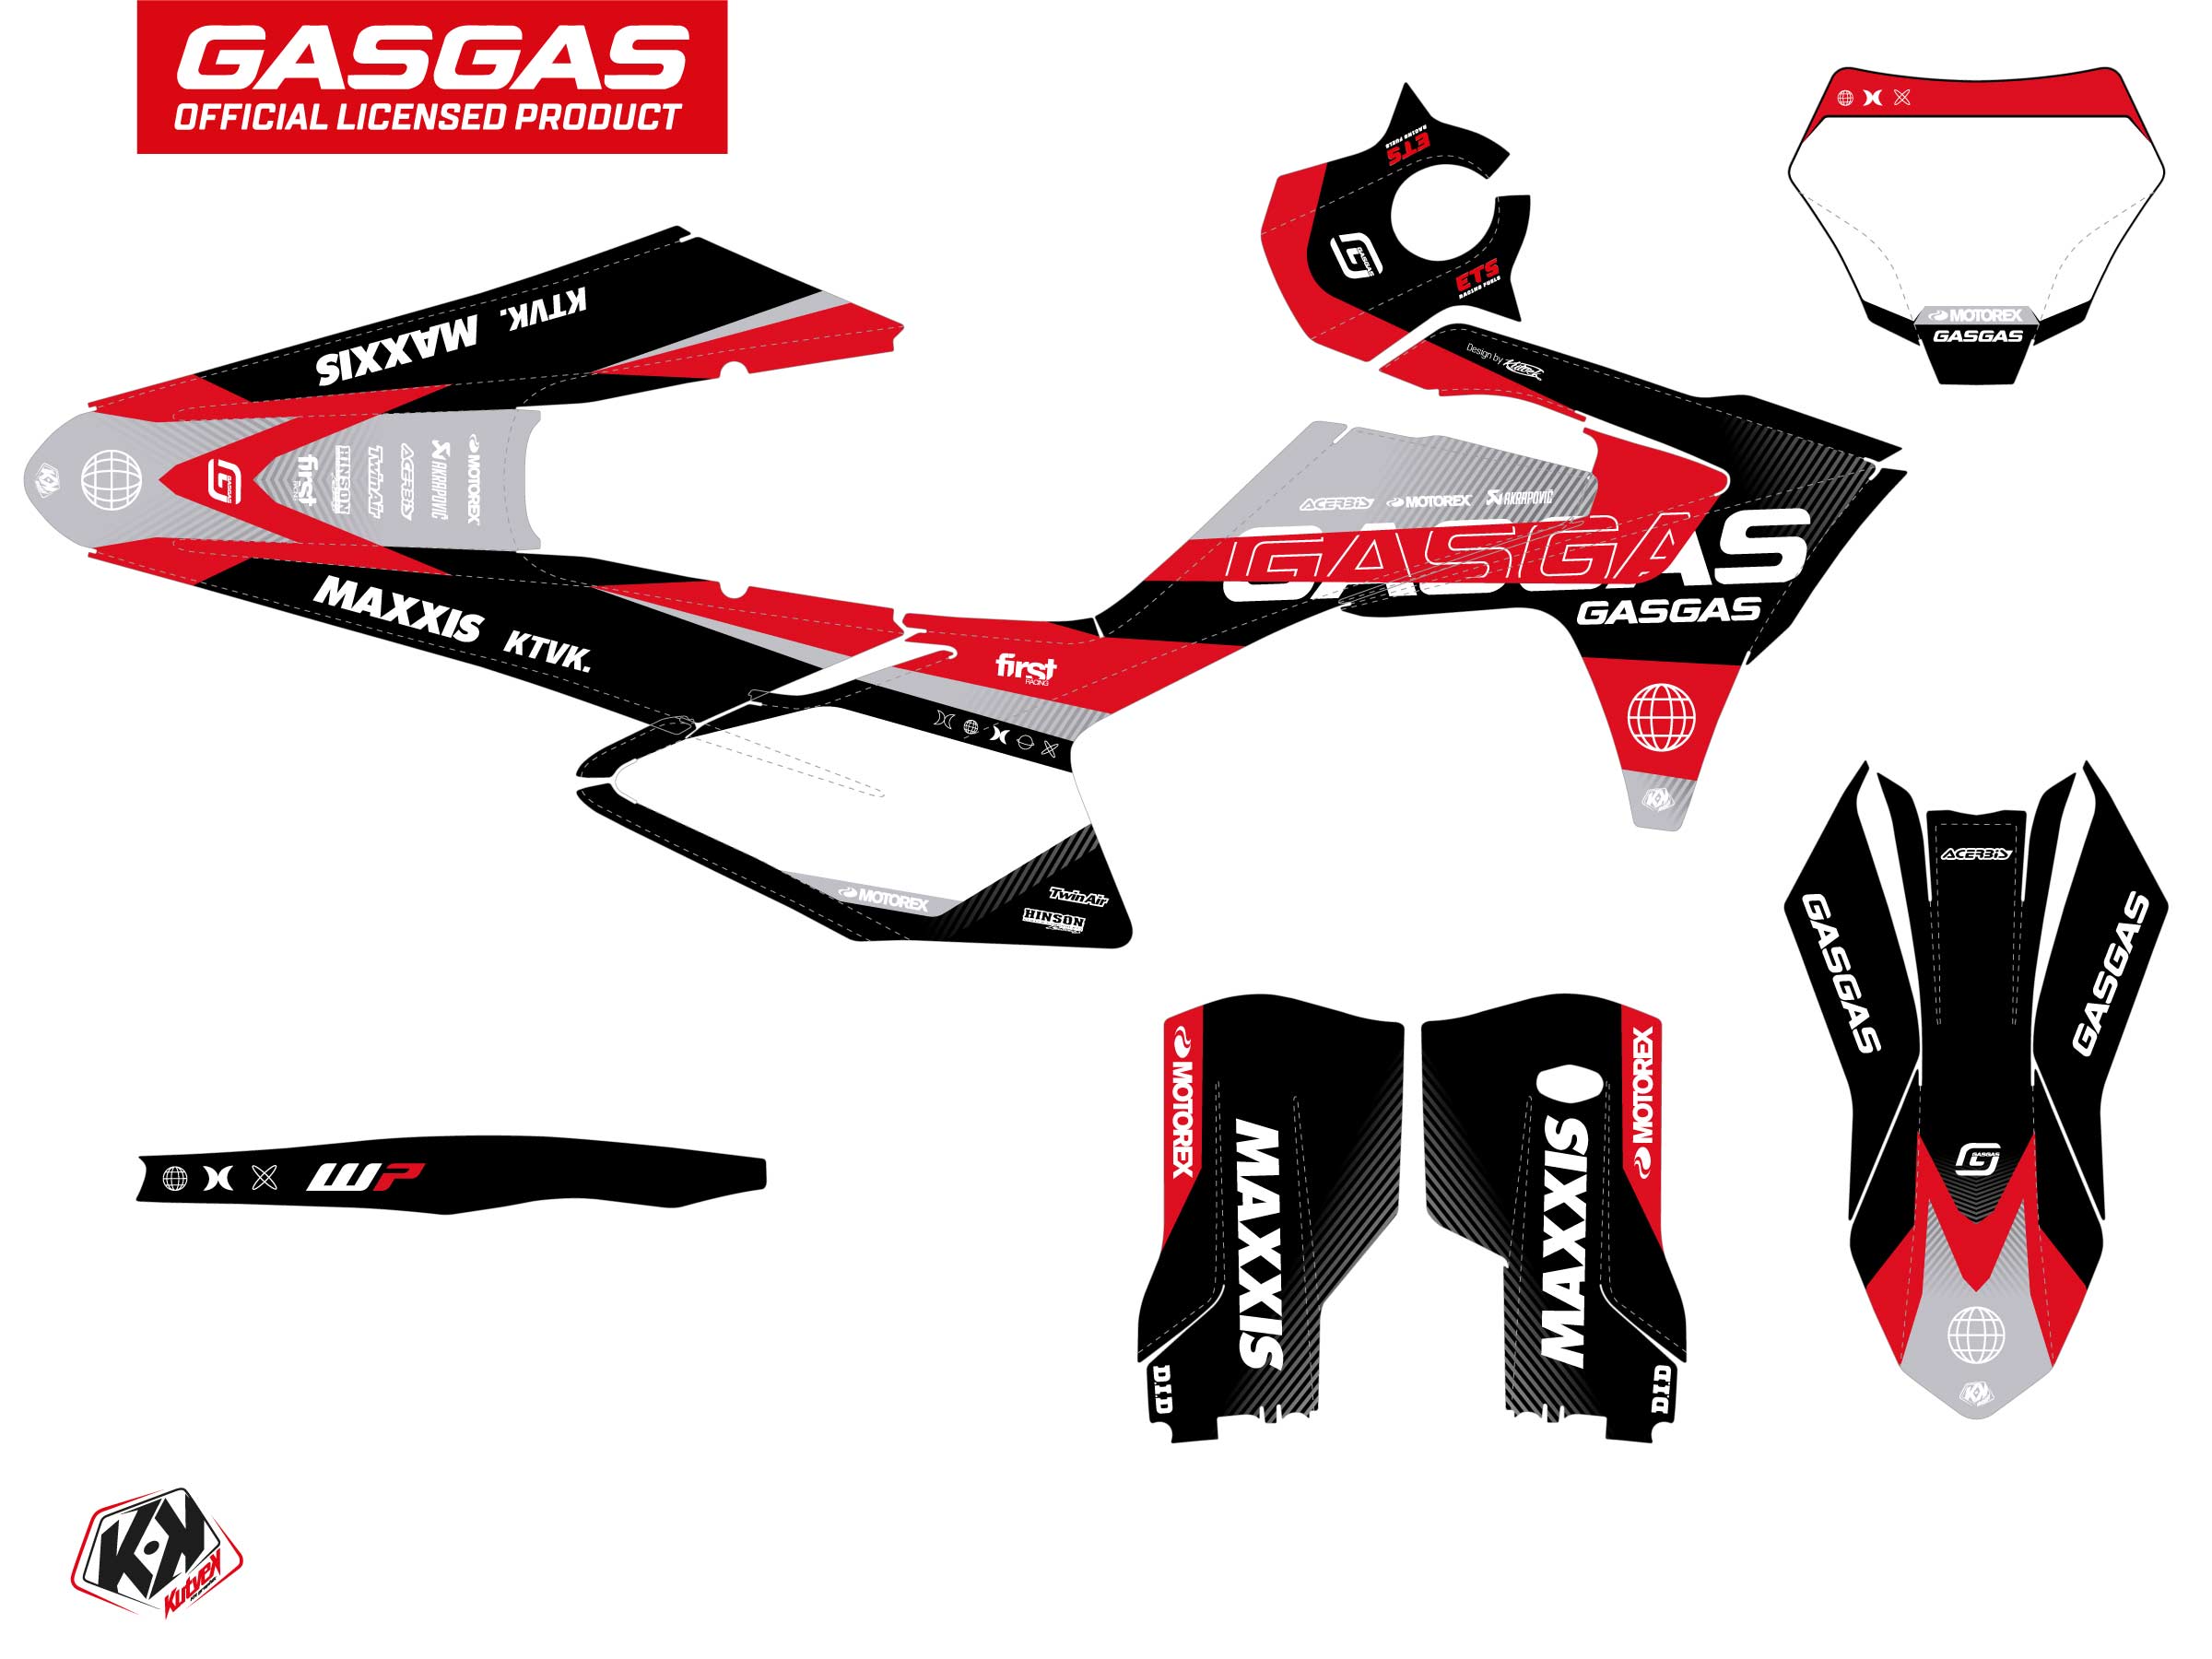 Kit Déco Motocross Kanyon Gasgas Ex 300 Noir